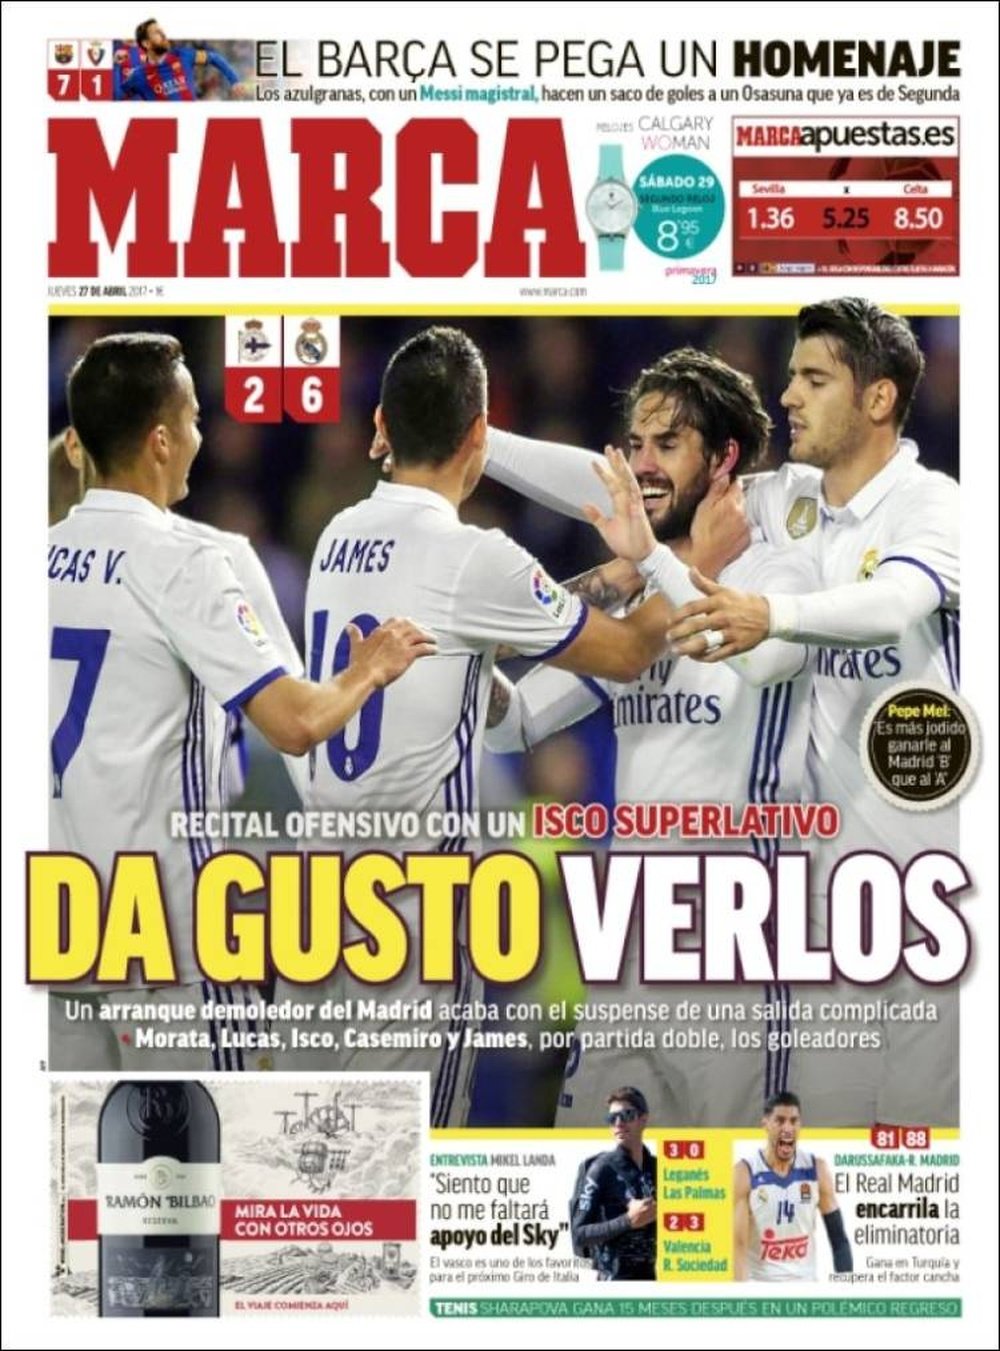 Capa do jornal 'Marca' do 27 de abril 2017. Marca